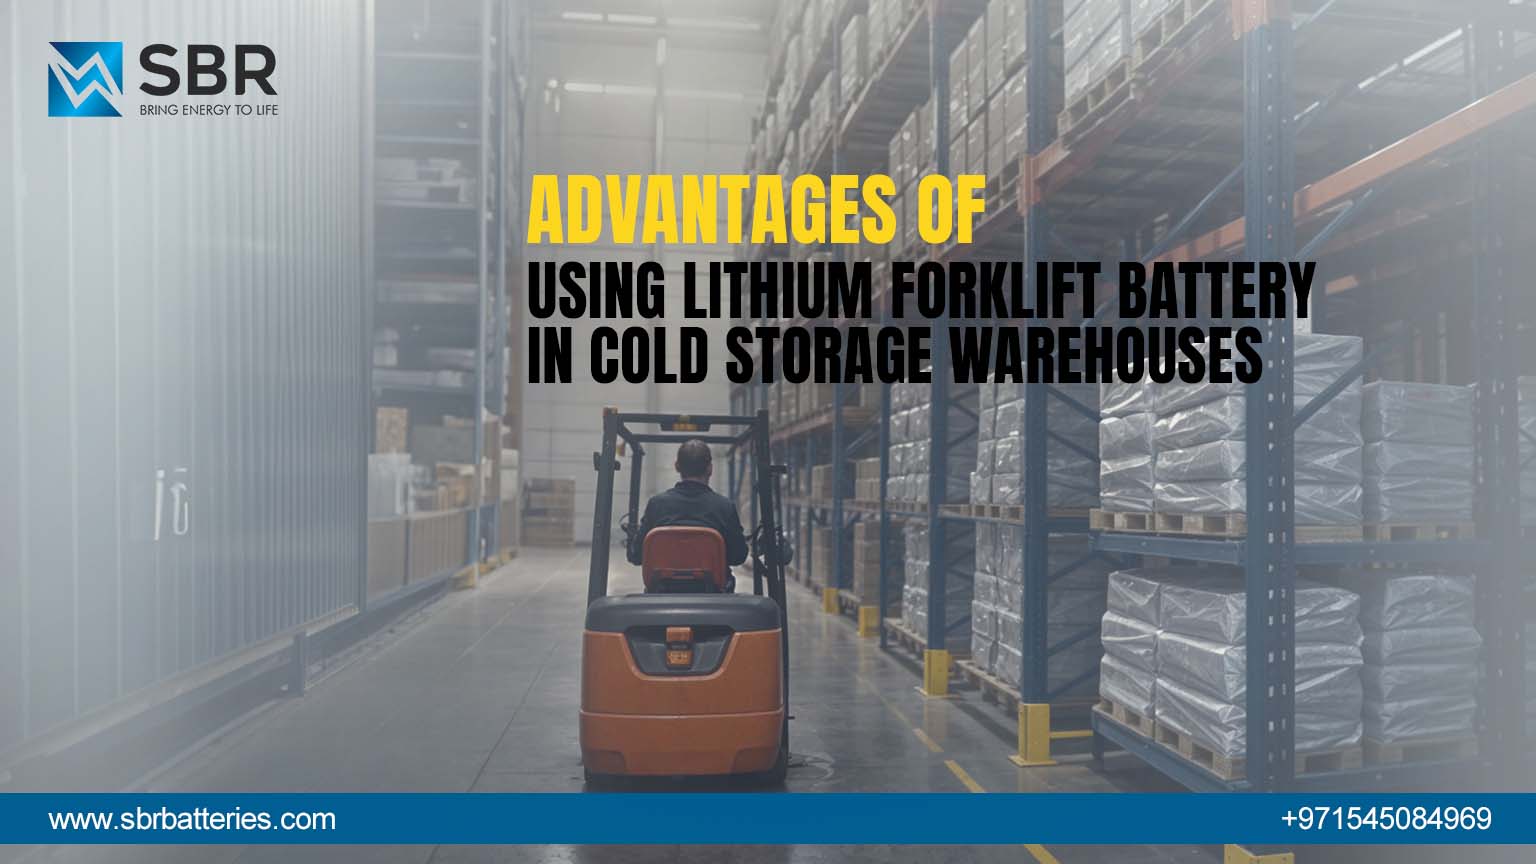 Lithium Forklift Batteries